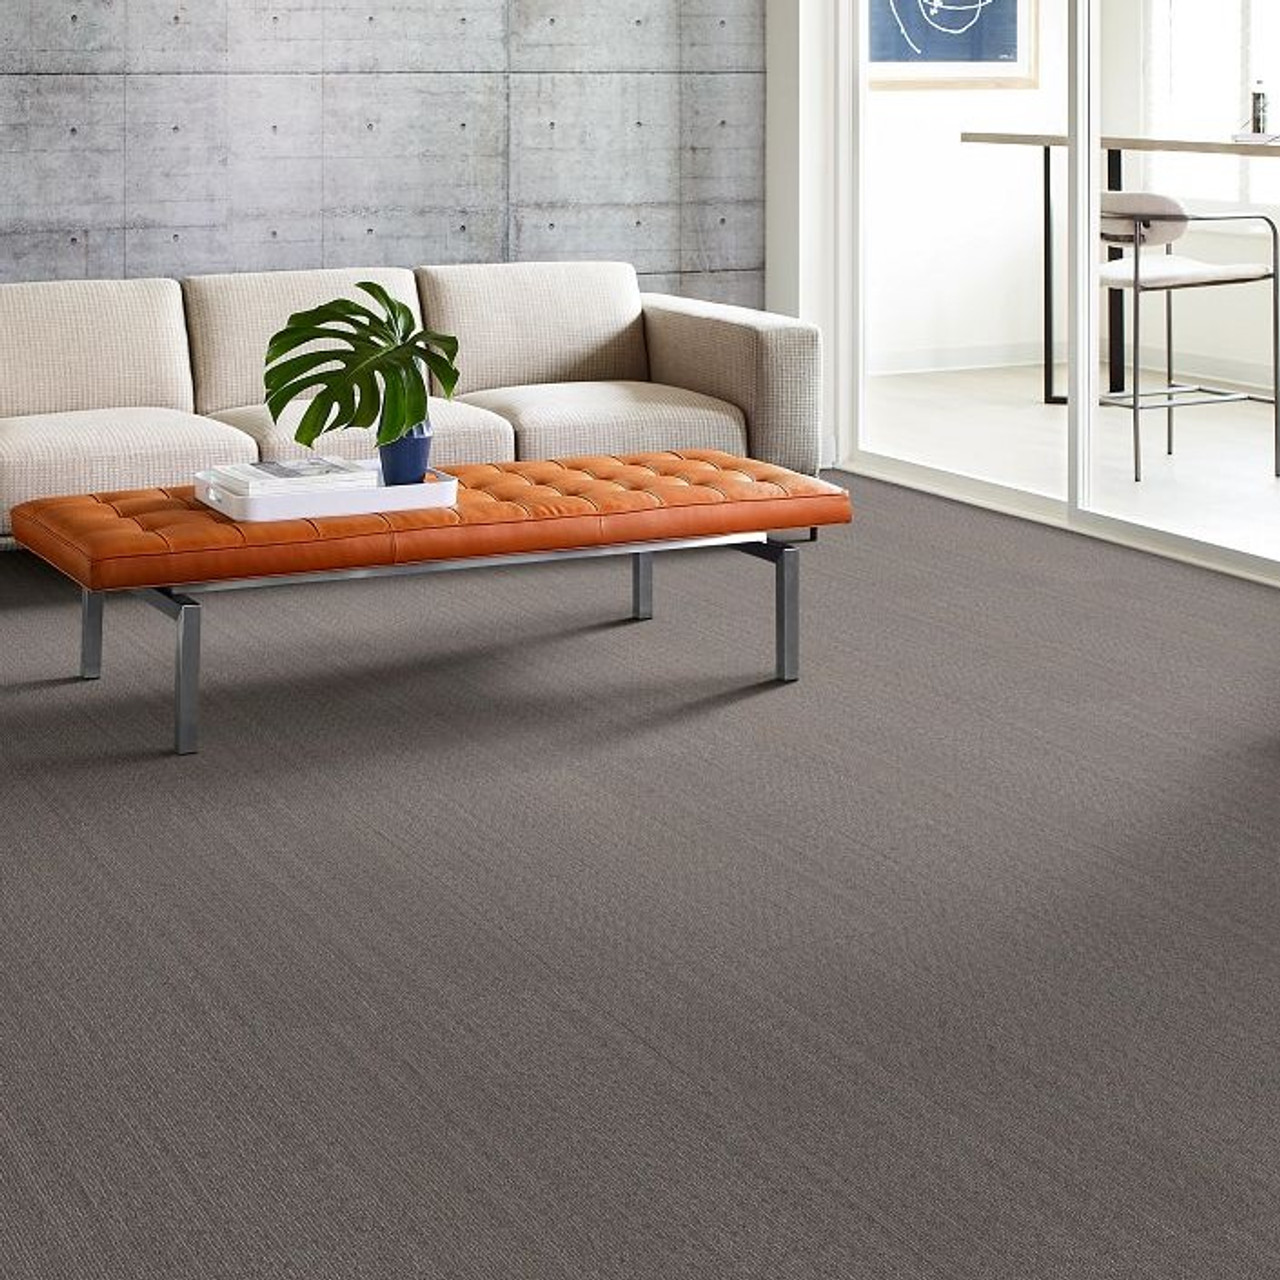 Shaw D1000 Lokworx & Broadloom Carpet Adhesive